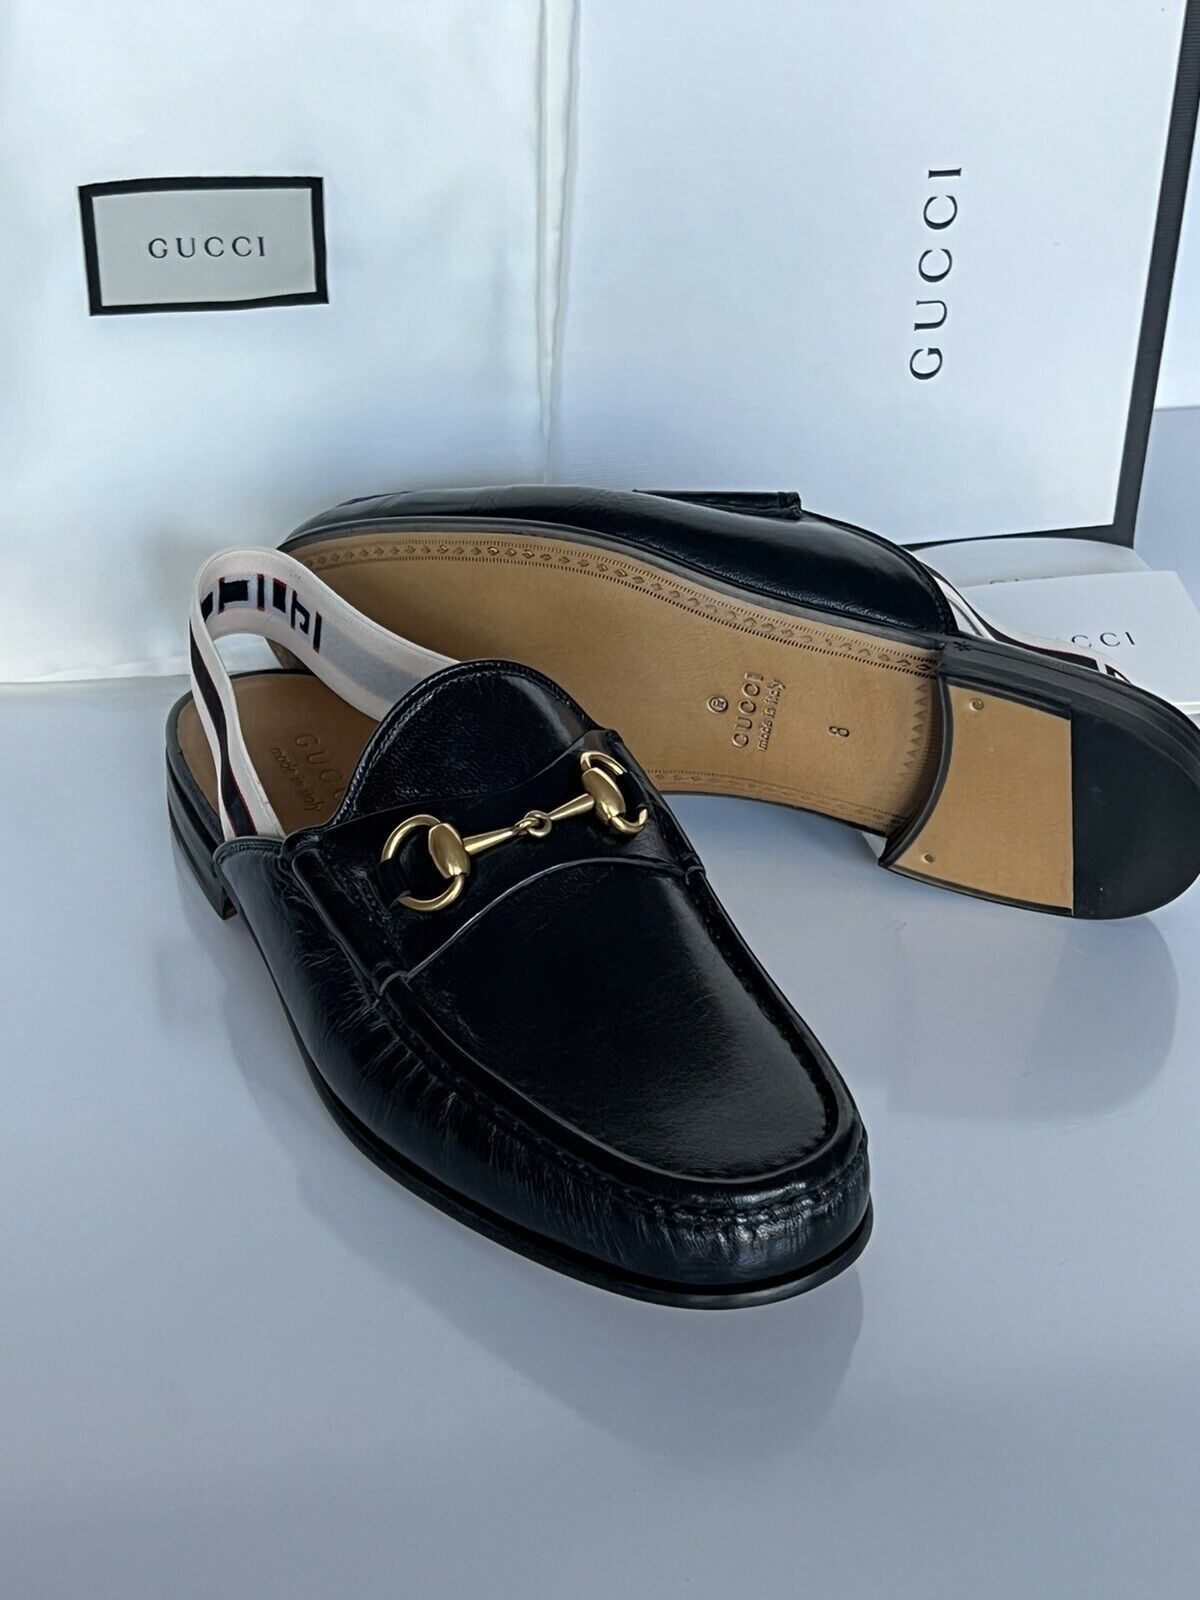 NIB Gucci Mens Horsebit Leather Slip On Black Sandals 8.5 US (Gucci 8) IT 523406